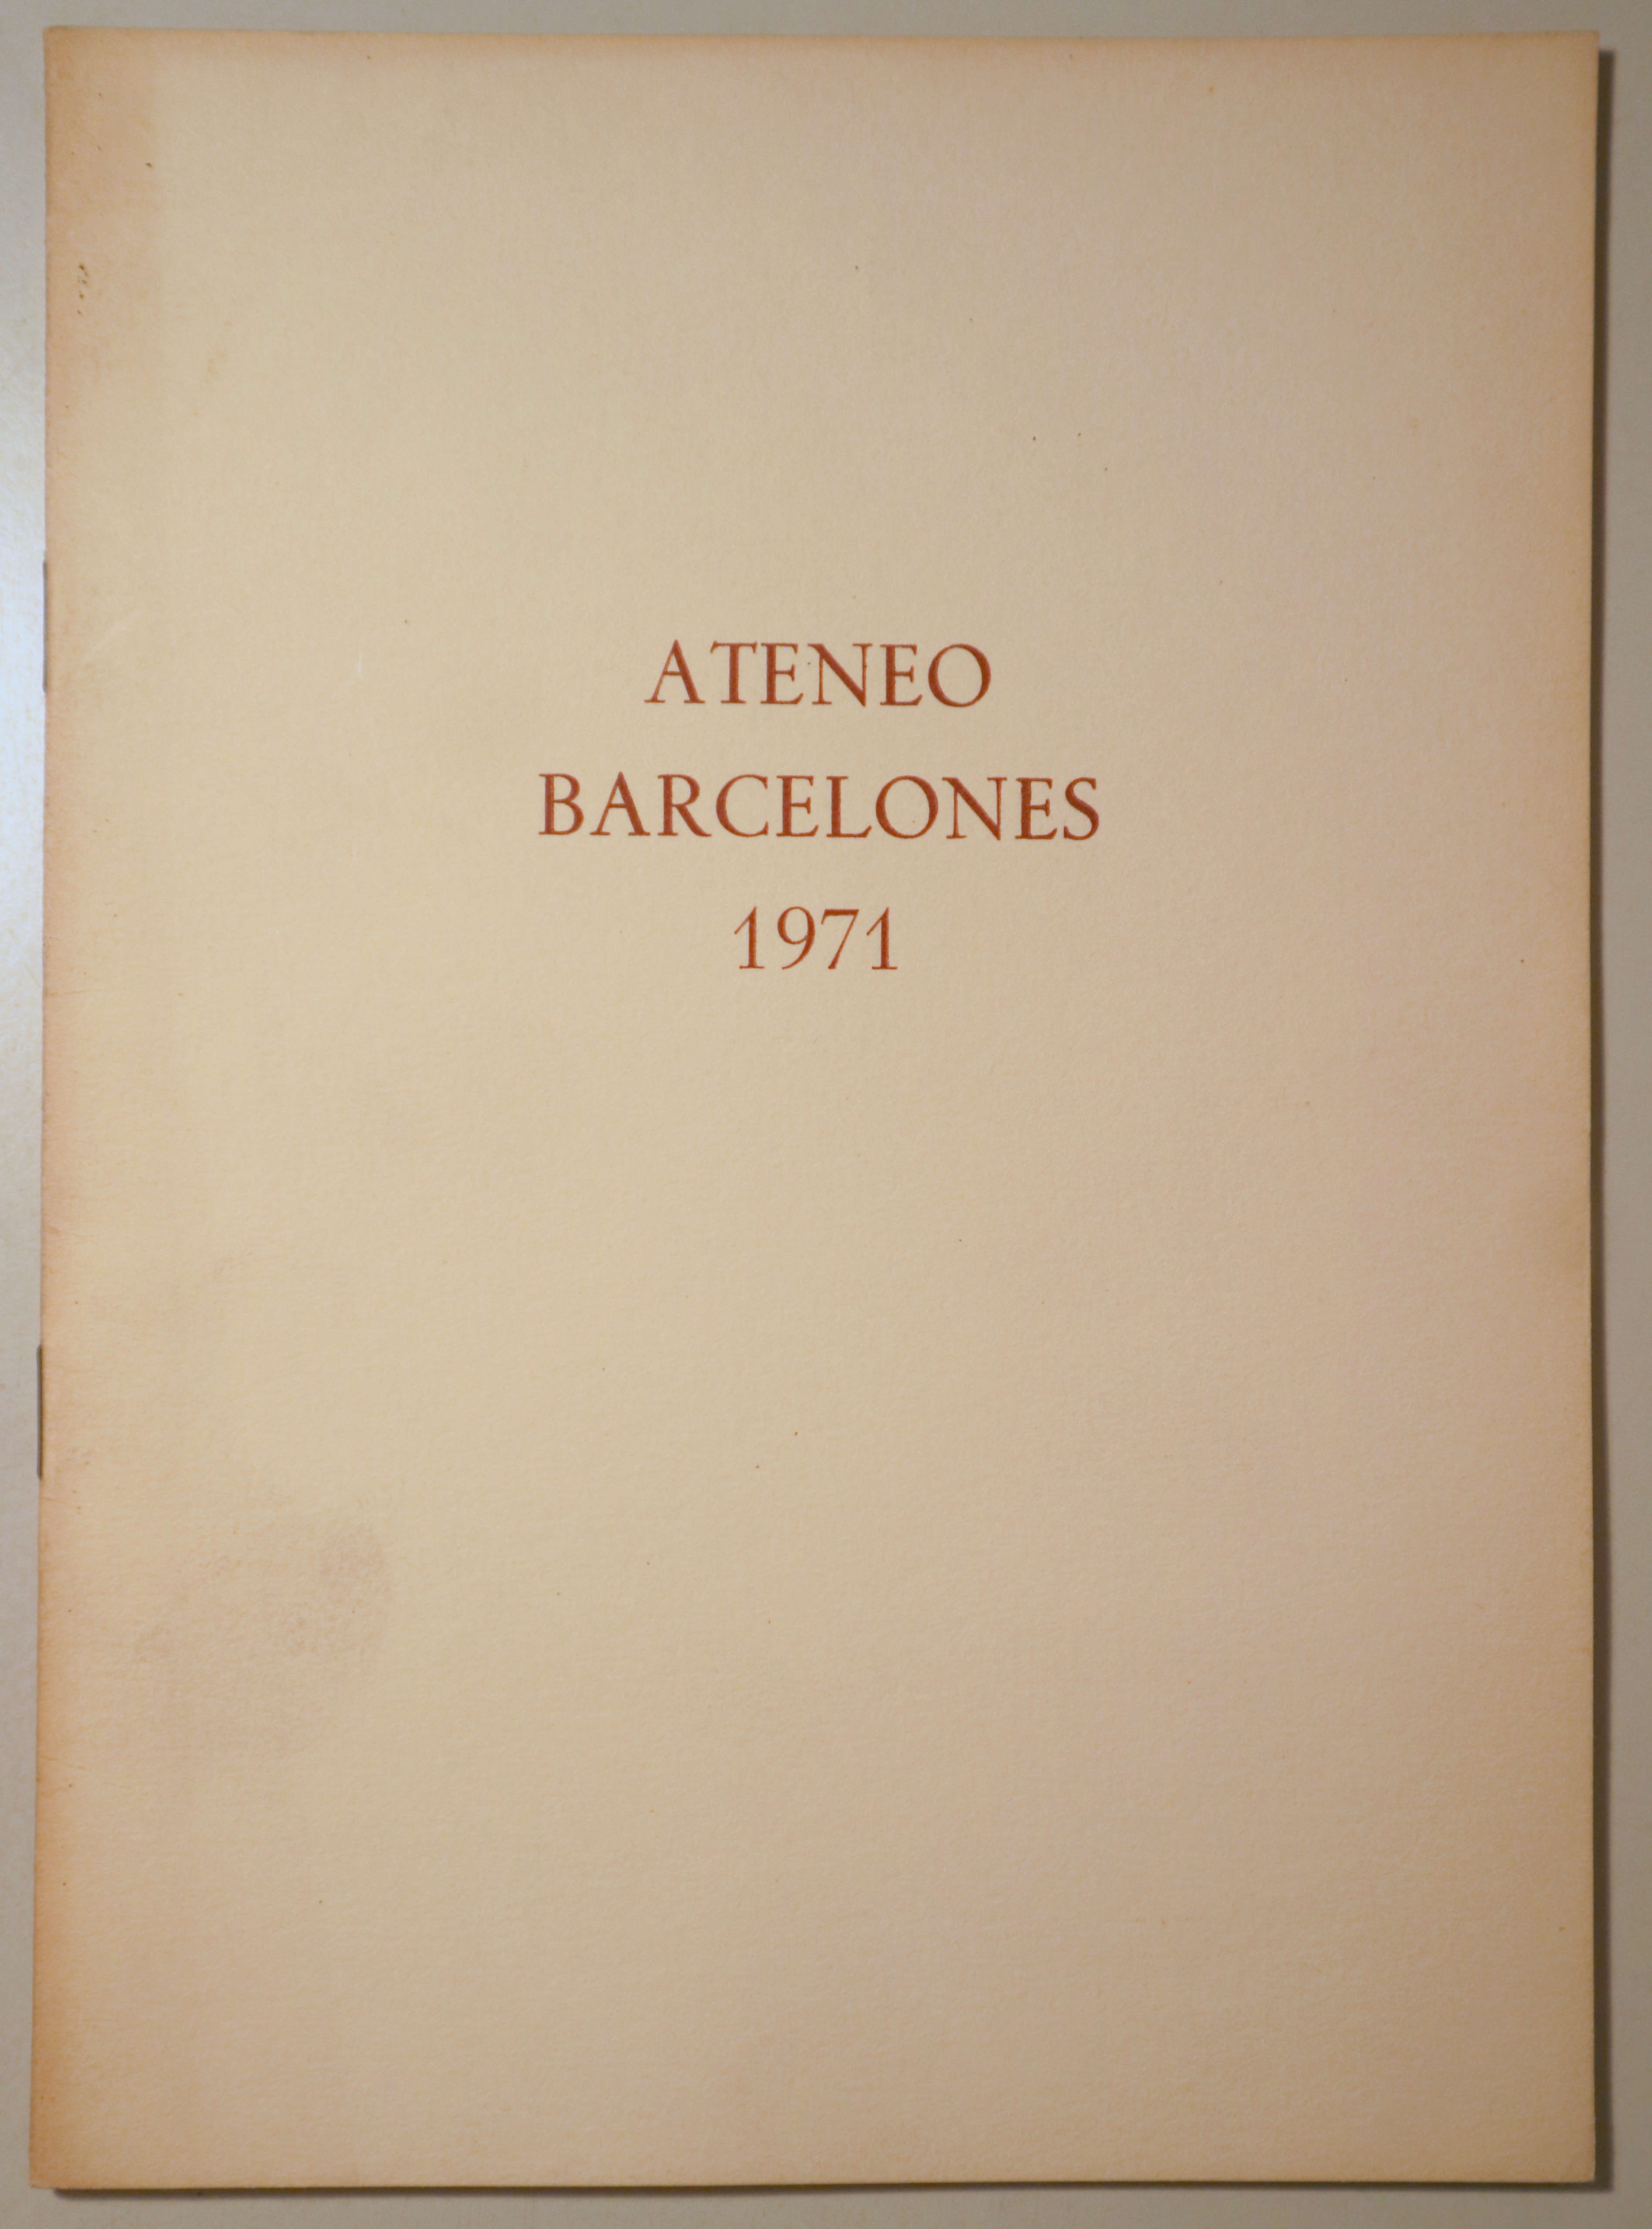 ATENEO BARCELONÉS 1971 - Barcelona 1971 - Ilustrado